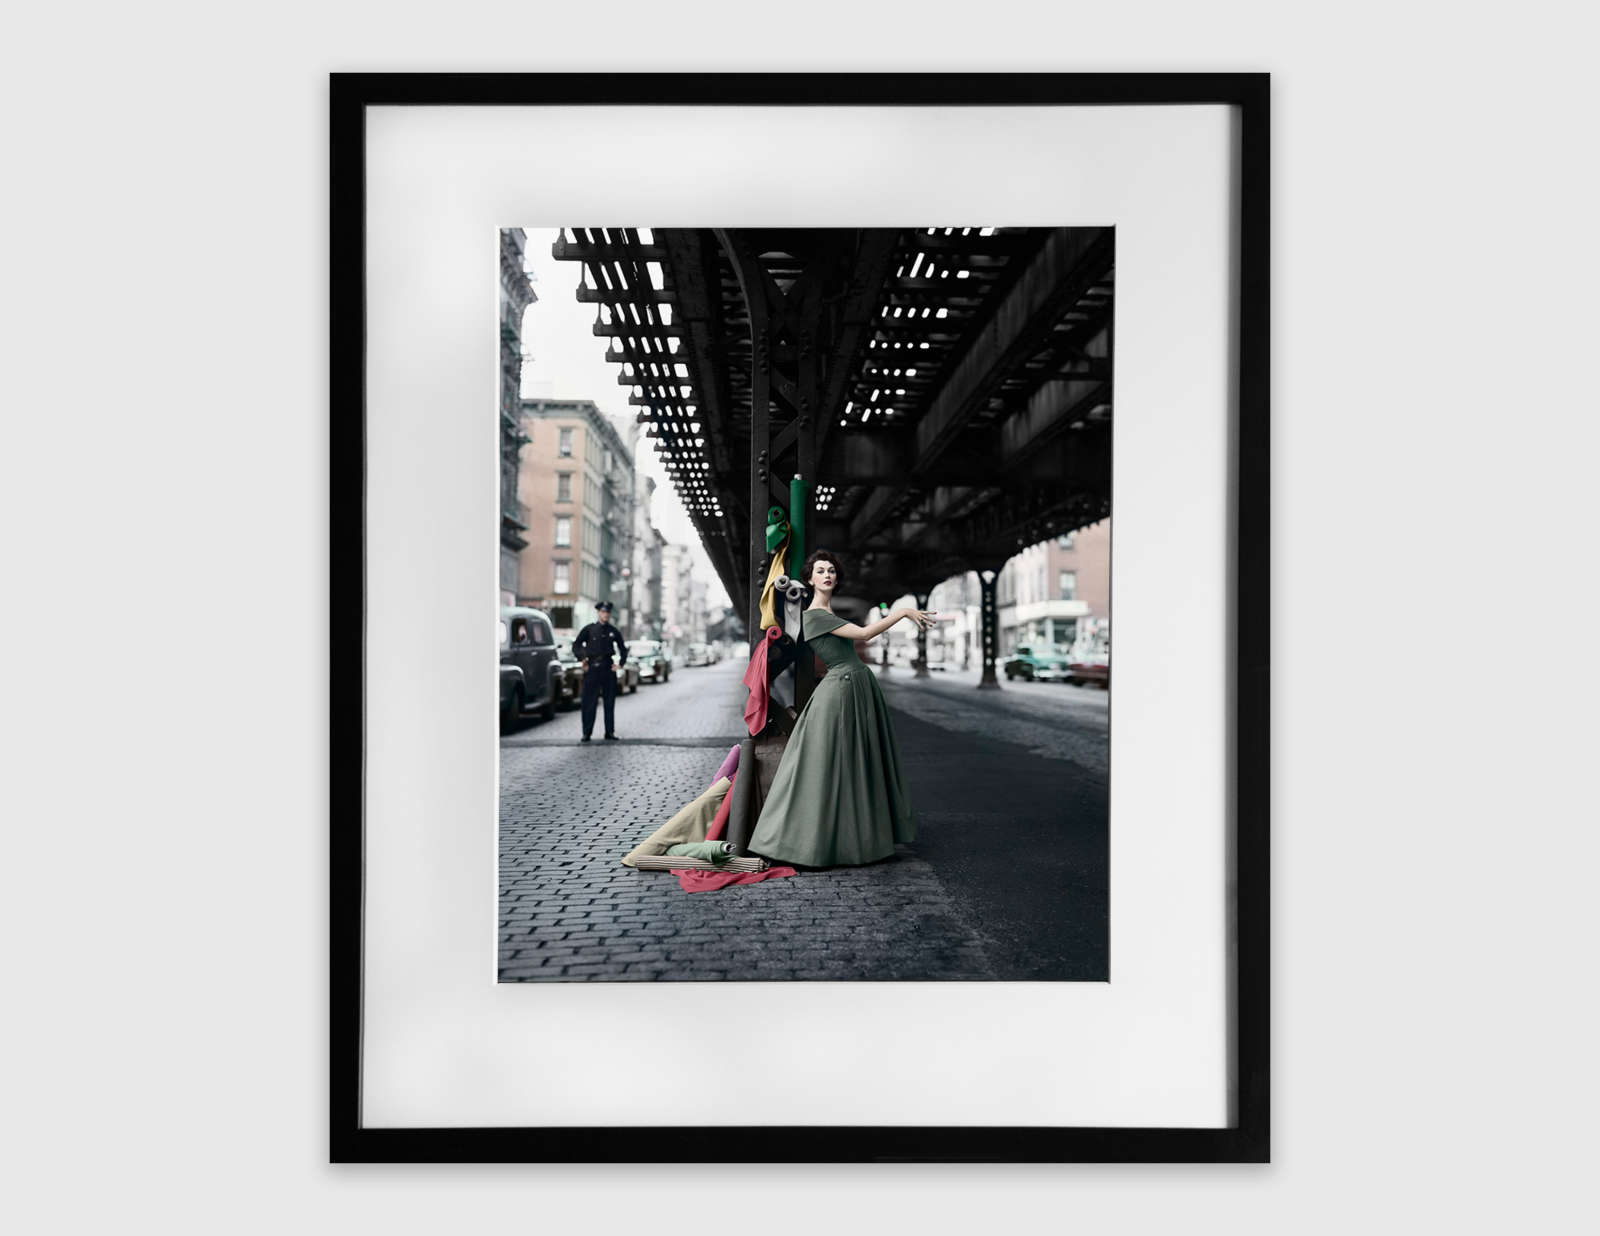 William Helburn, Dovima Under the El, Dior Creates Cosmopolitan Drama, Under 3rd Avenue elevated train, New York, NY, 1956